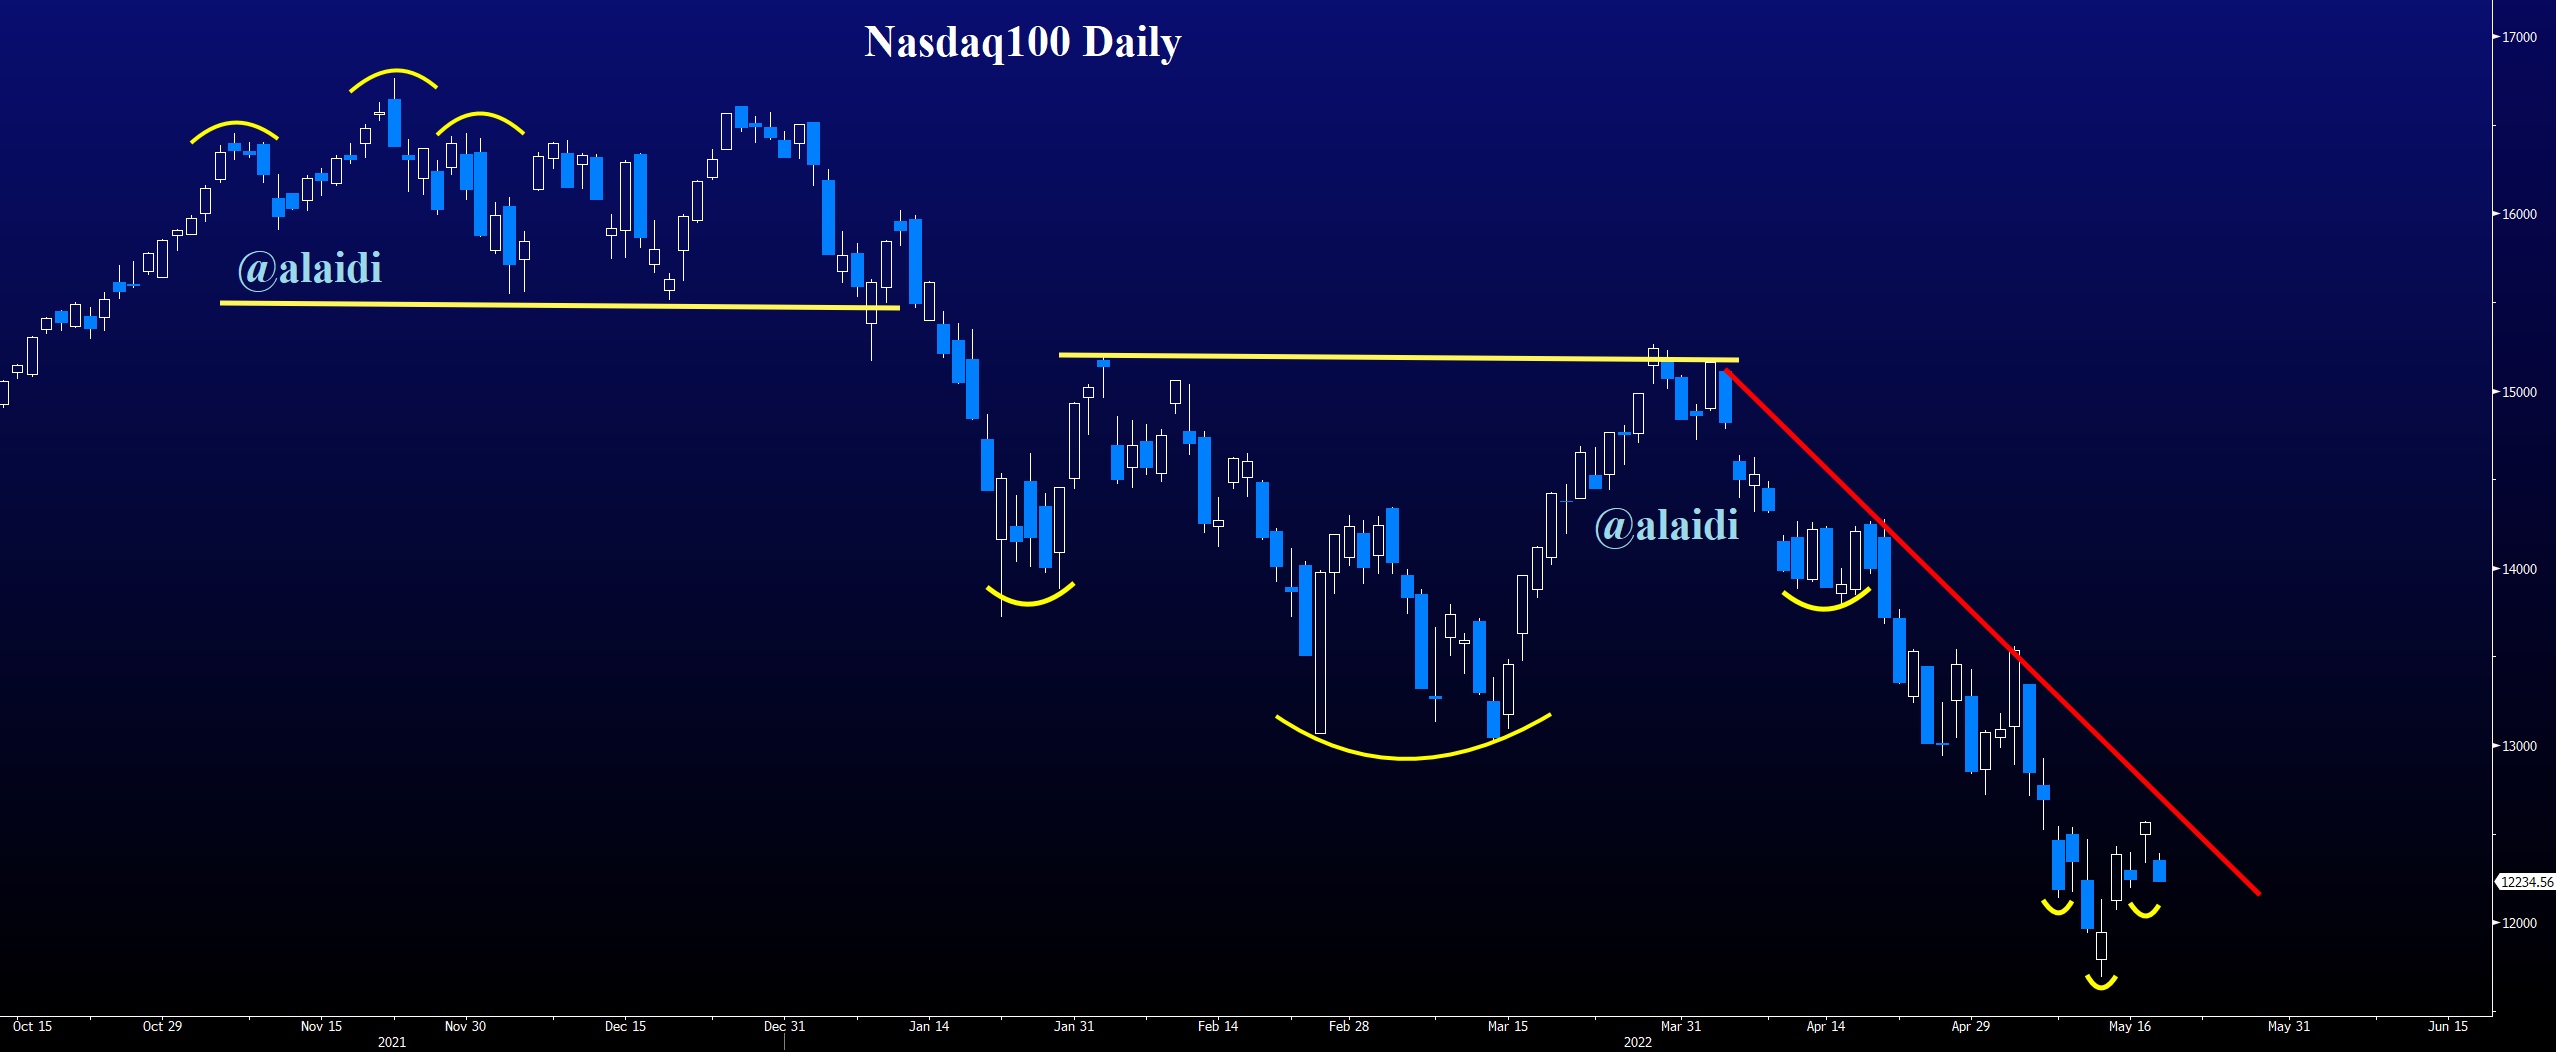 NASDAQ-100 Daily Chart